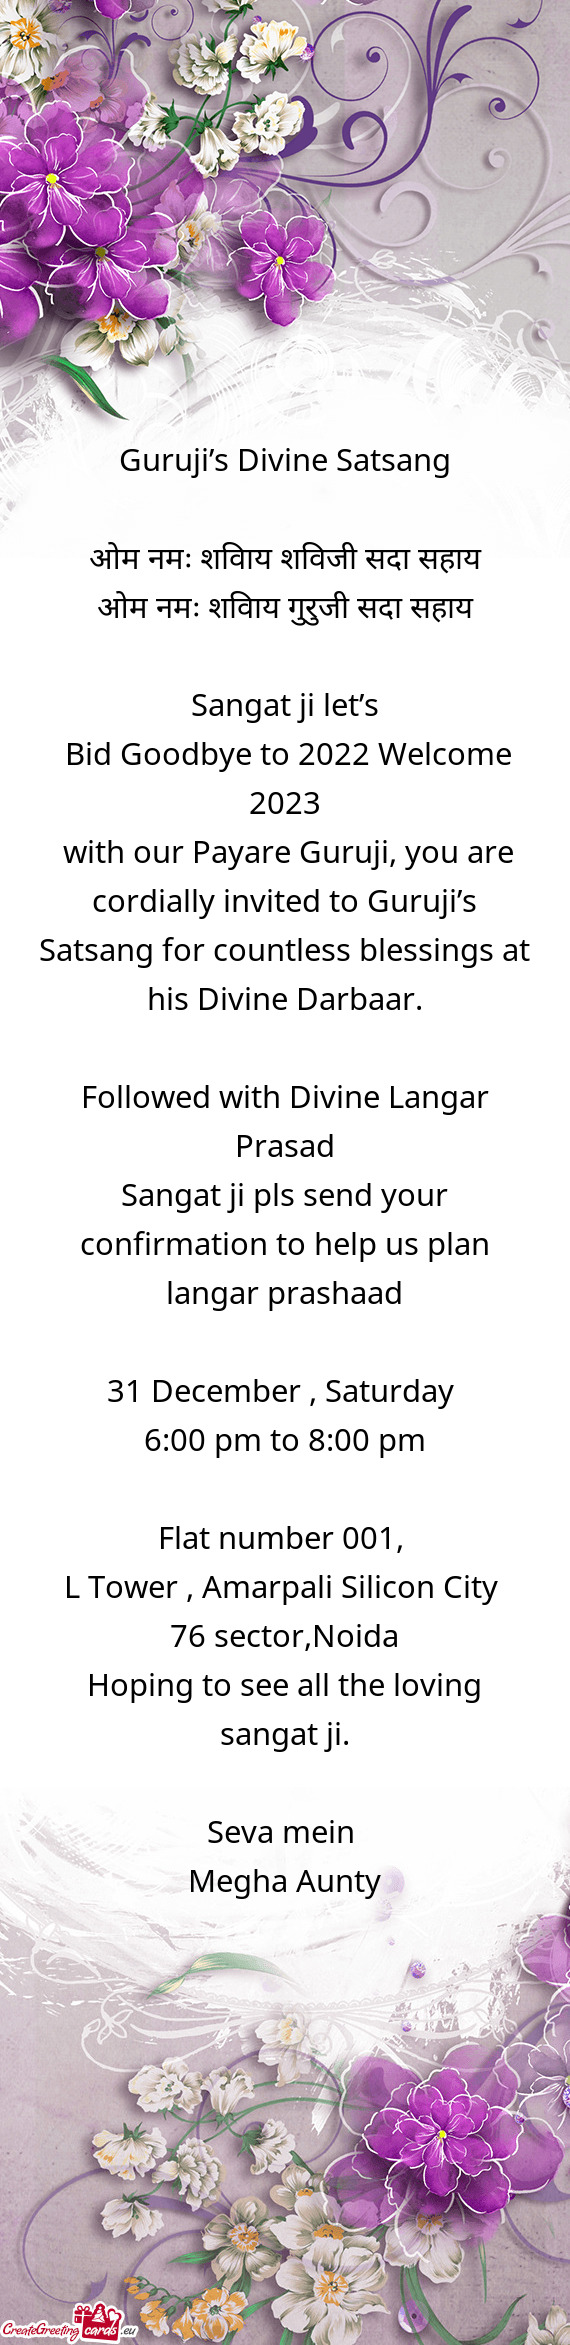 Guruji’s Divine Satsang